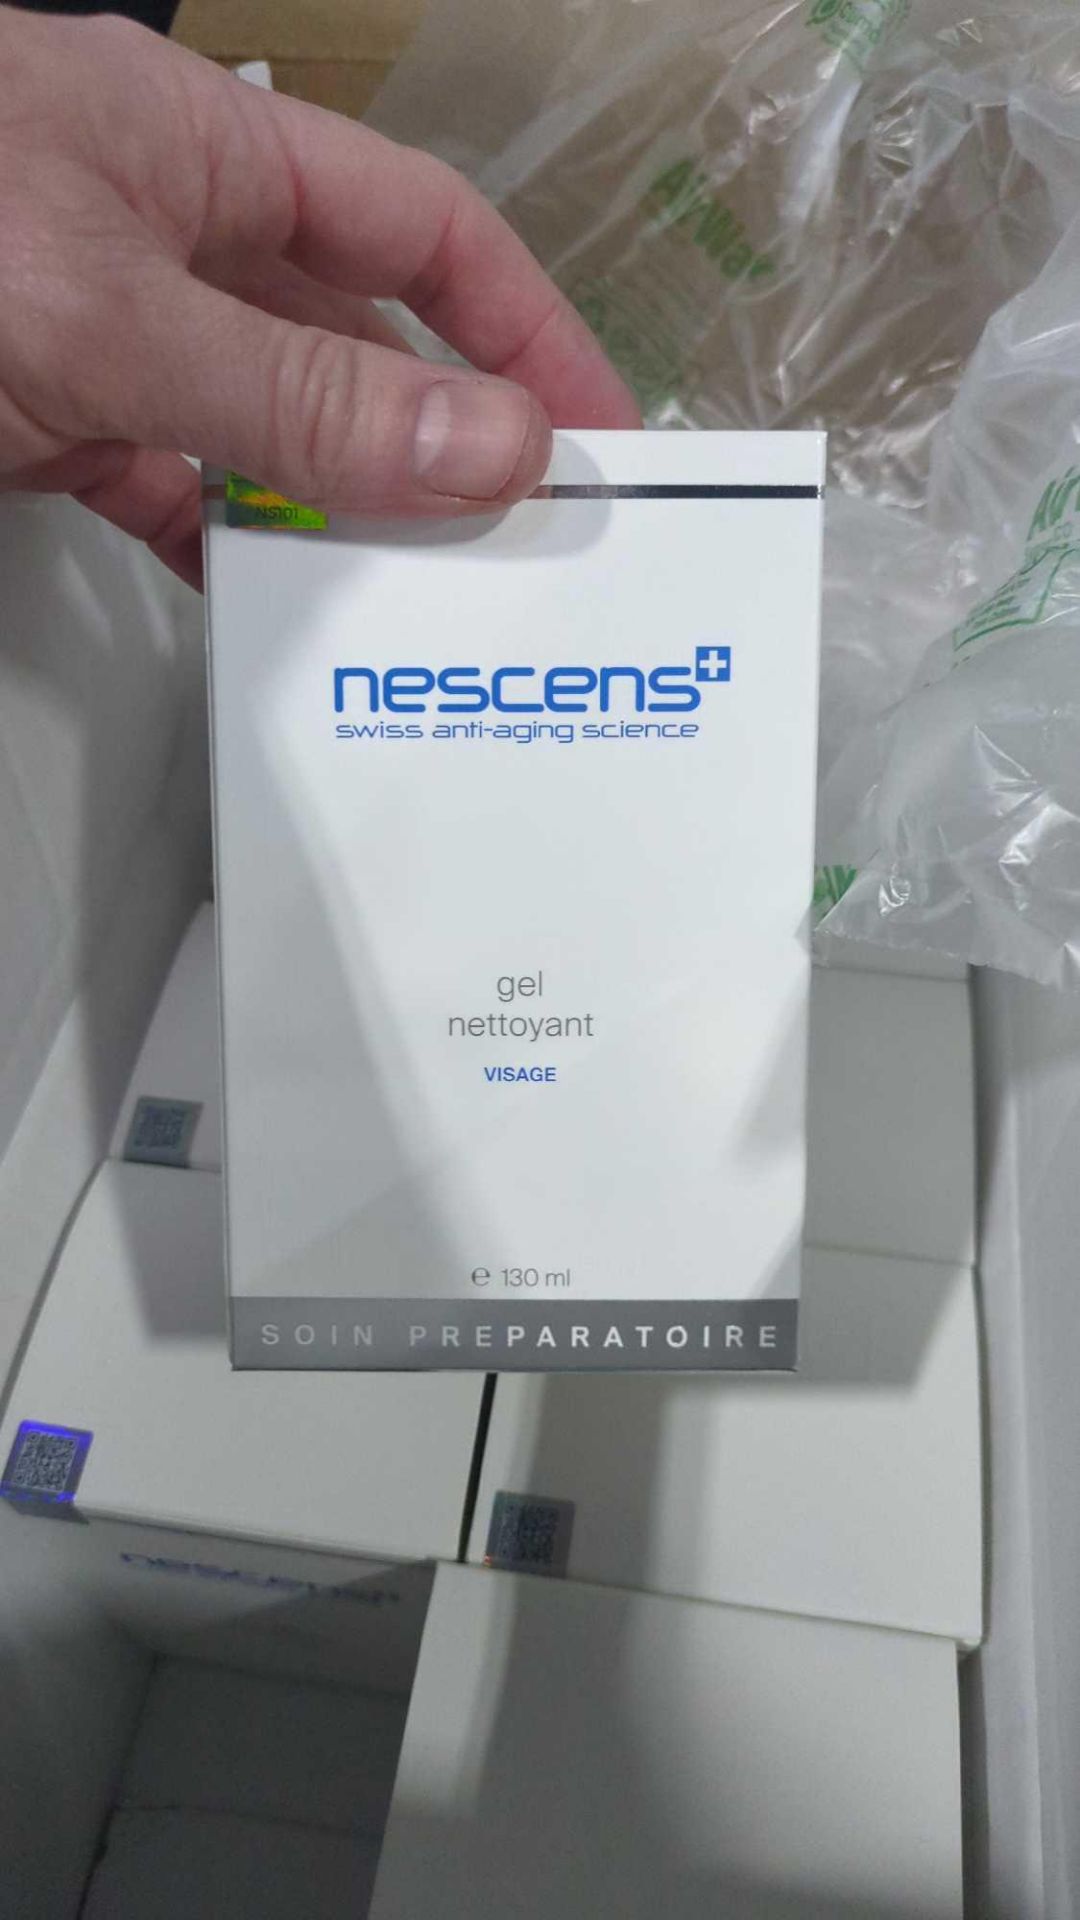 Nescens Swiss Anti-Aging Science: Metabolic Activator toner, total anti-aging, anti-skin slackening - Bild 14 aus 18